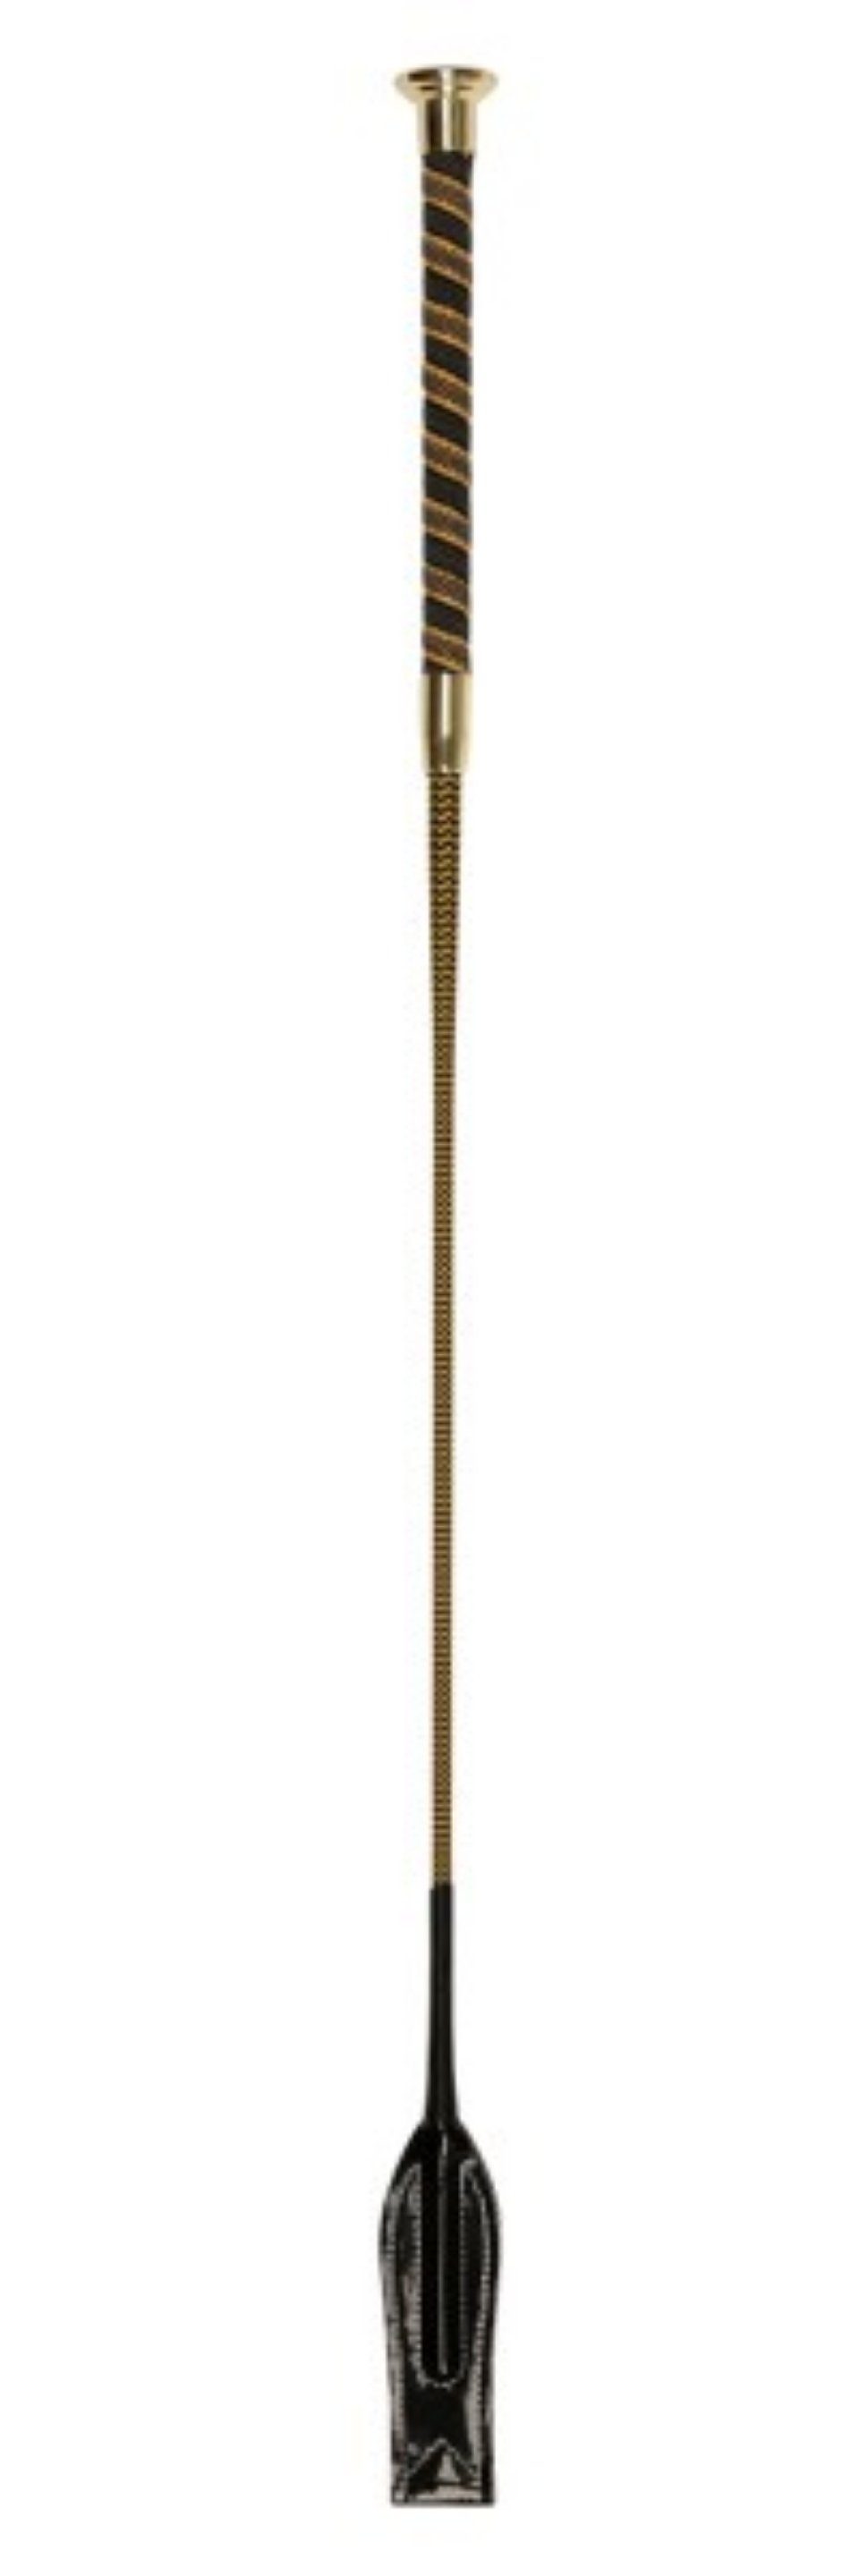 Kerbl Springgerte Springgerte mit Klatsche 65 cm gold 325997, 1-tlg.